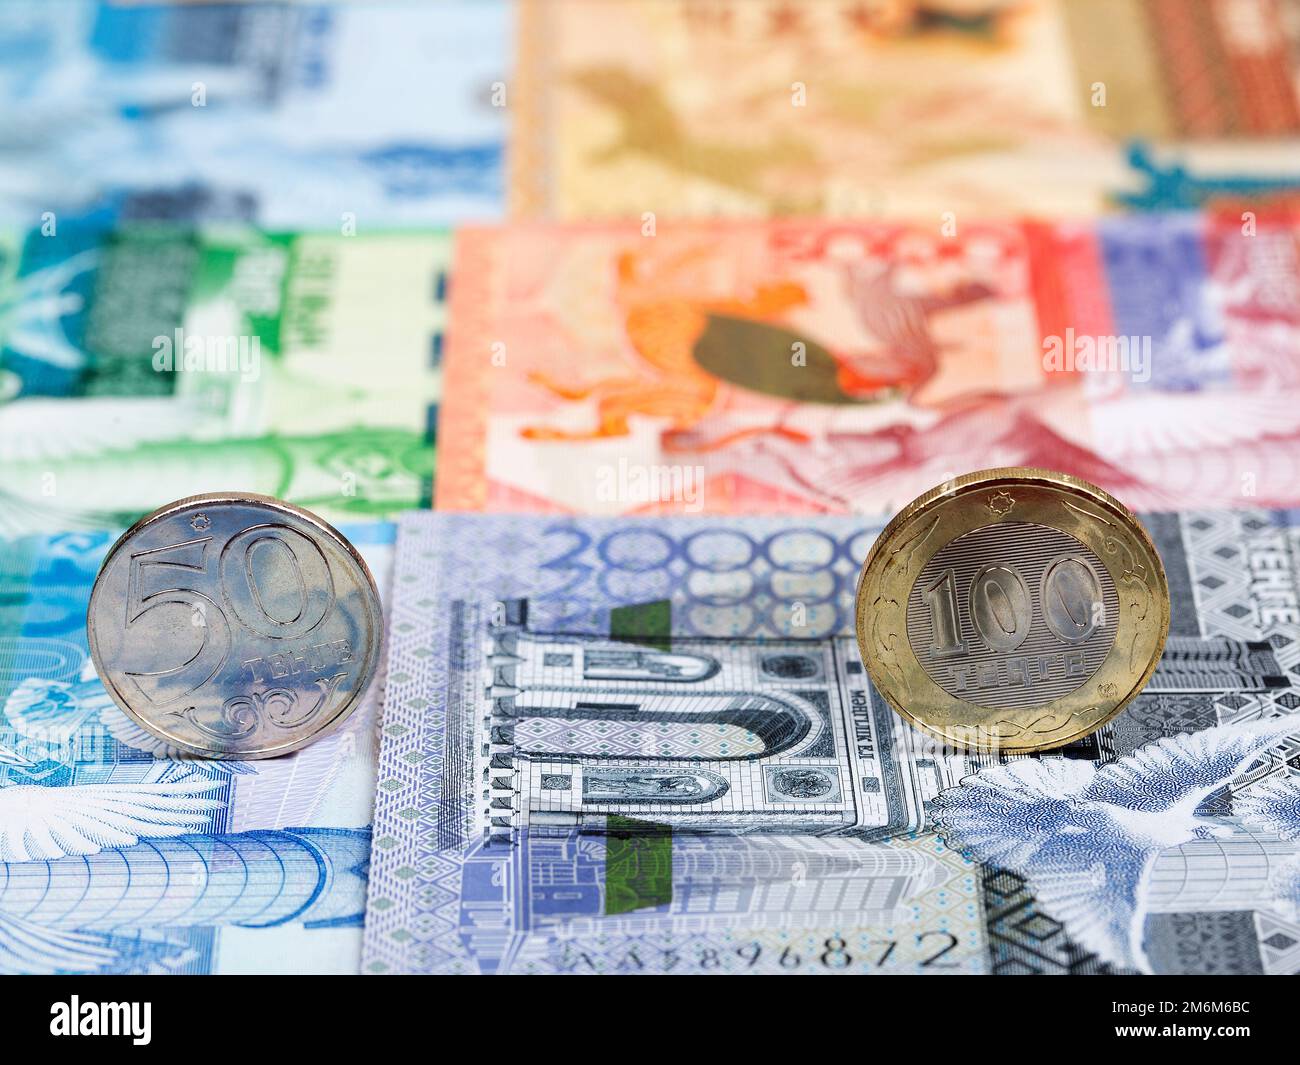 Kazakhstani coins - tenge on the background of money Stock Photo